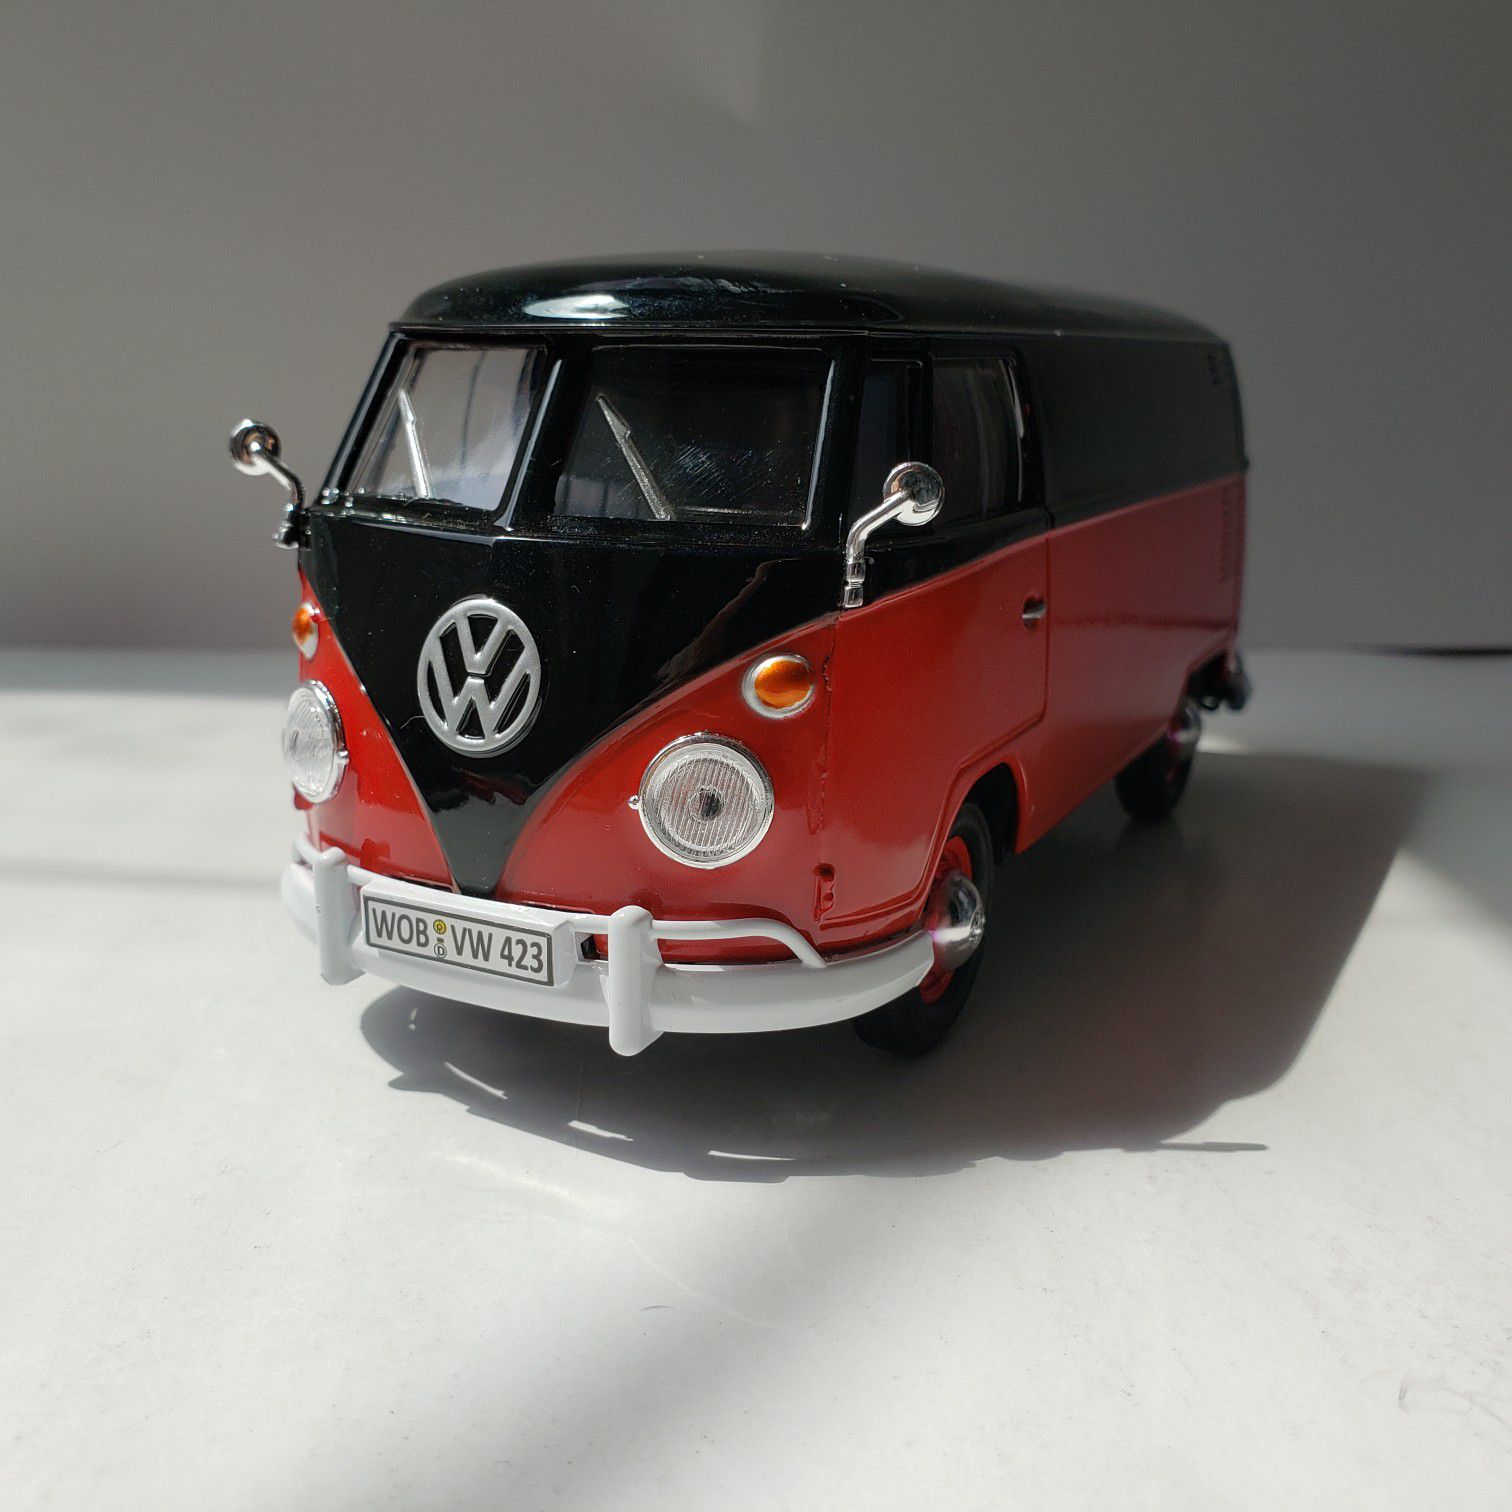 NEW Large 1960s Volkswagen Beetle Mini Transport Delivery Van Car Toy Diecast Metal Model Scale 1/24 Vintage 60s Classic